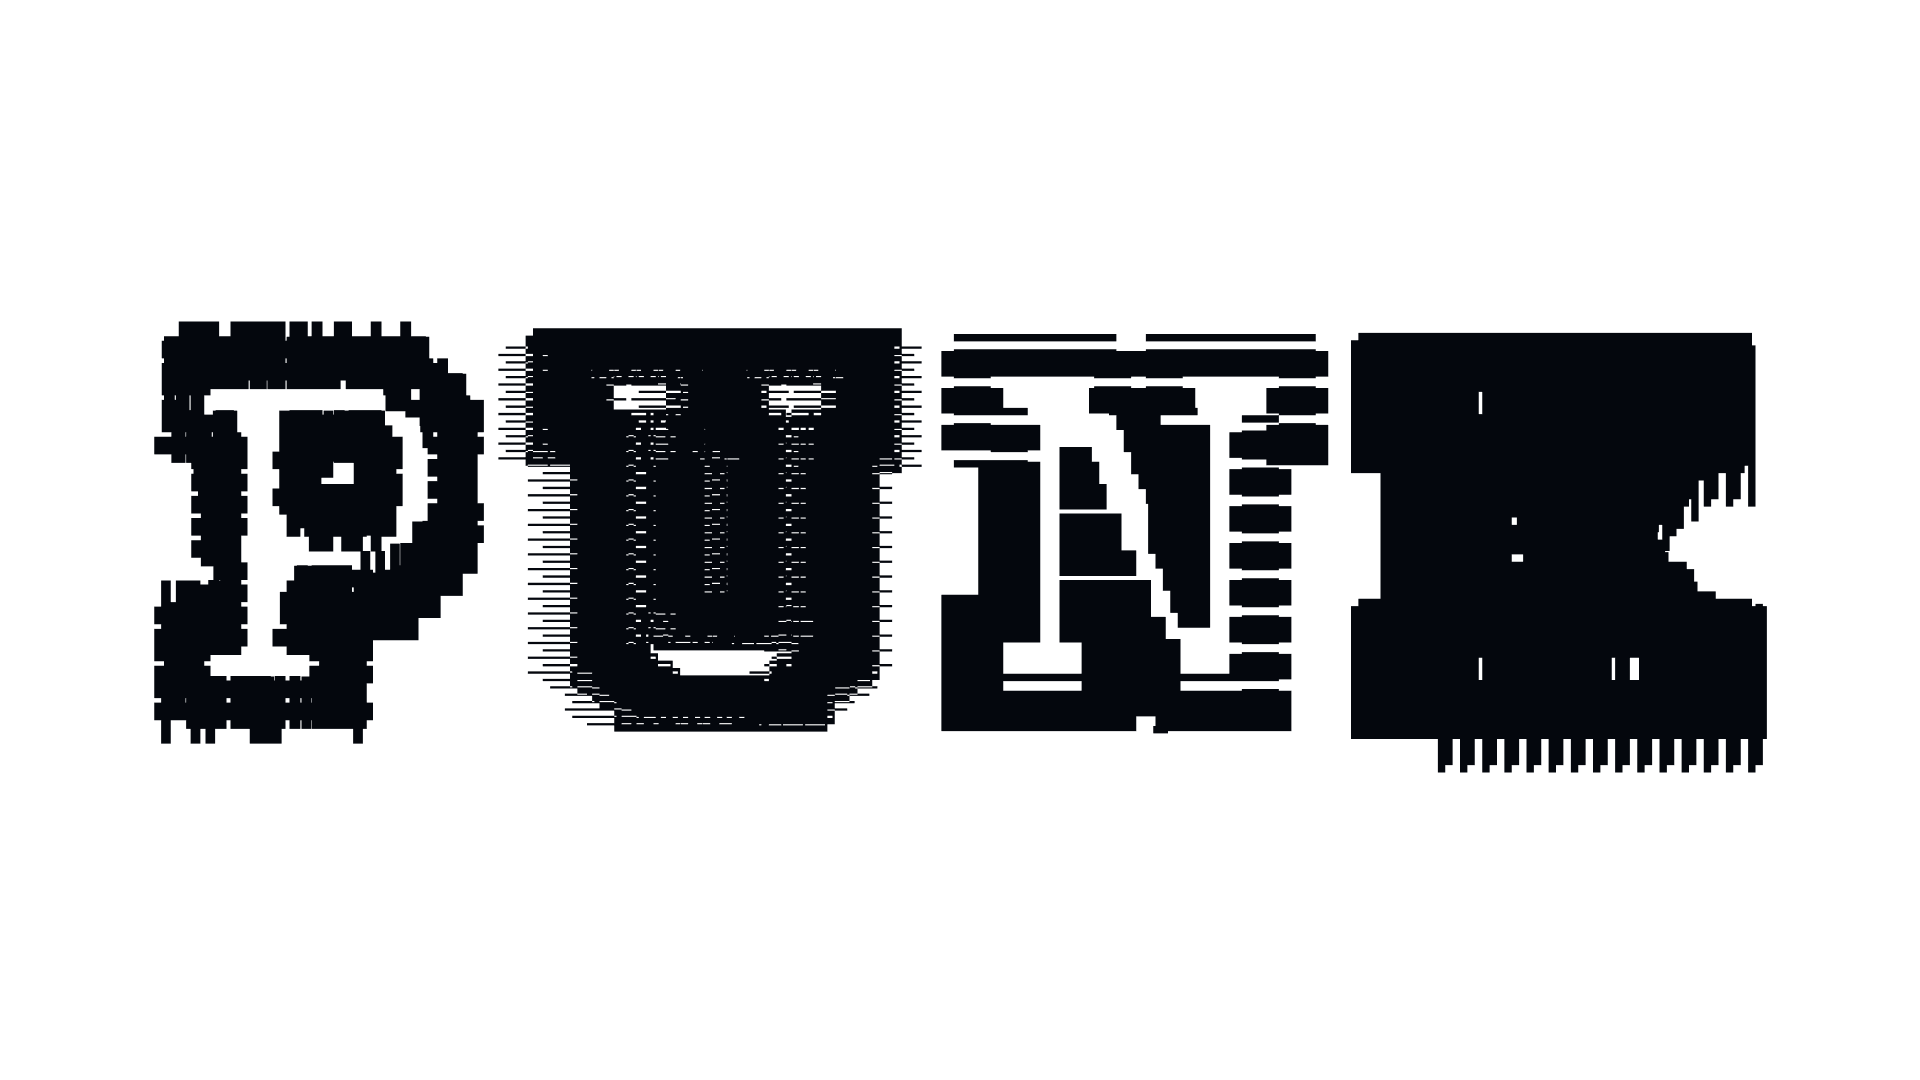 Animation of Punk logo variations